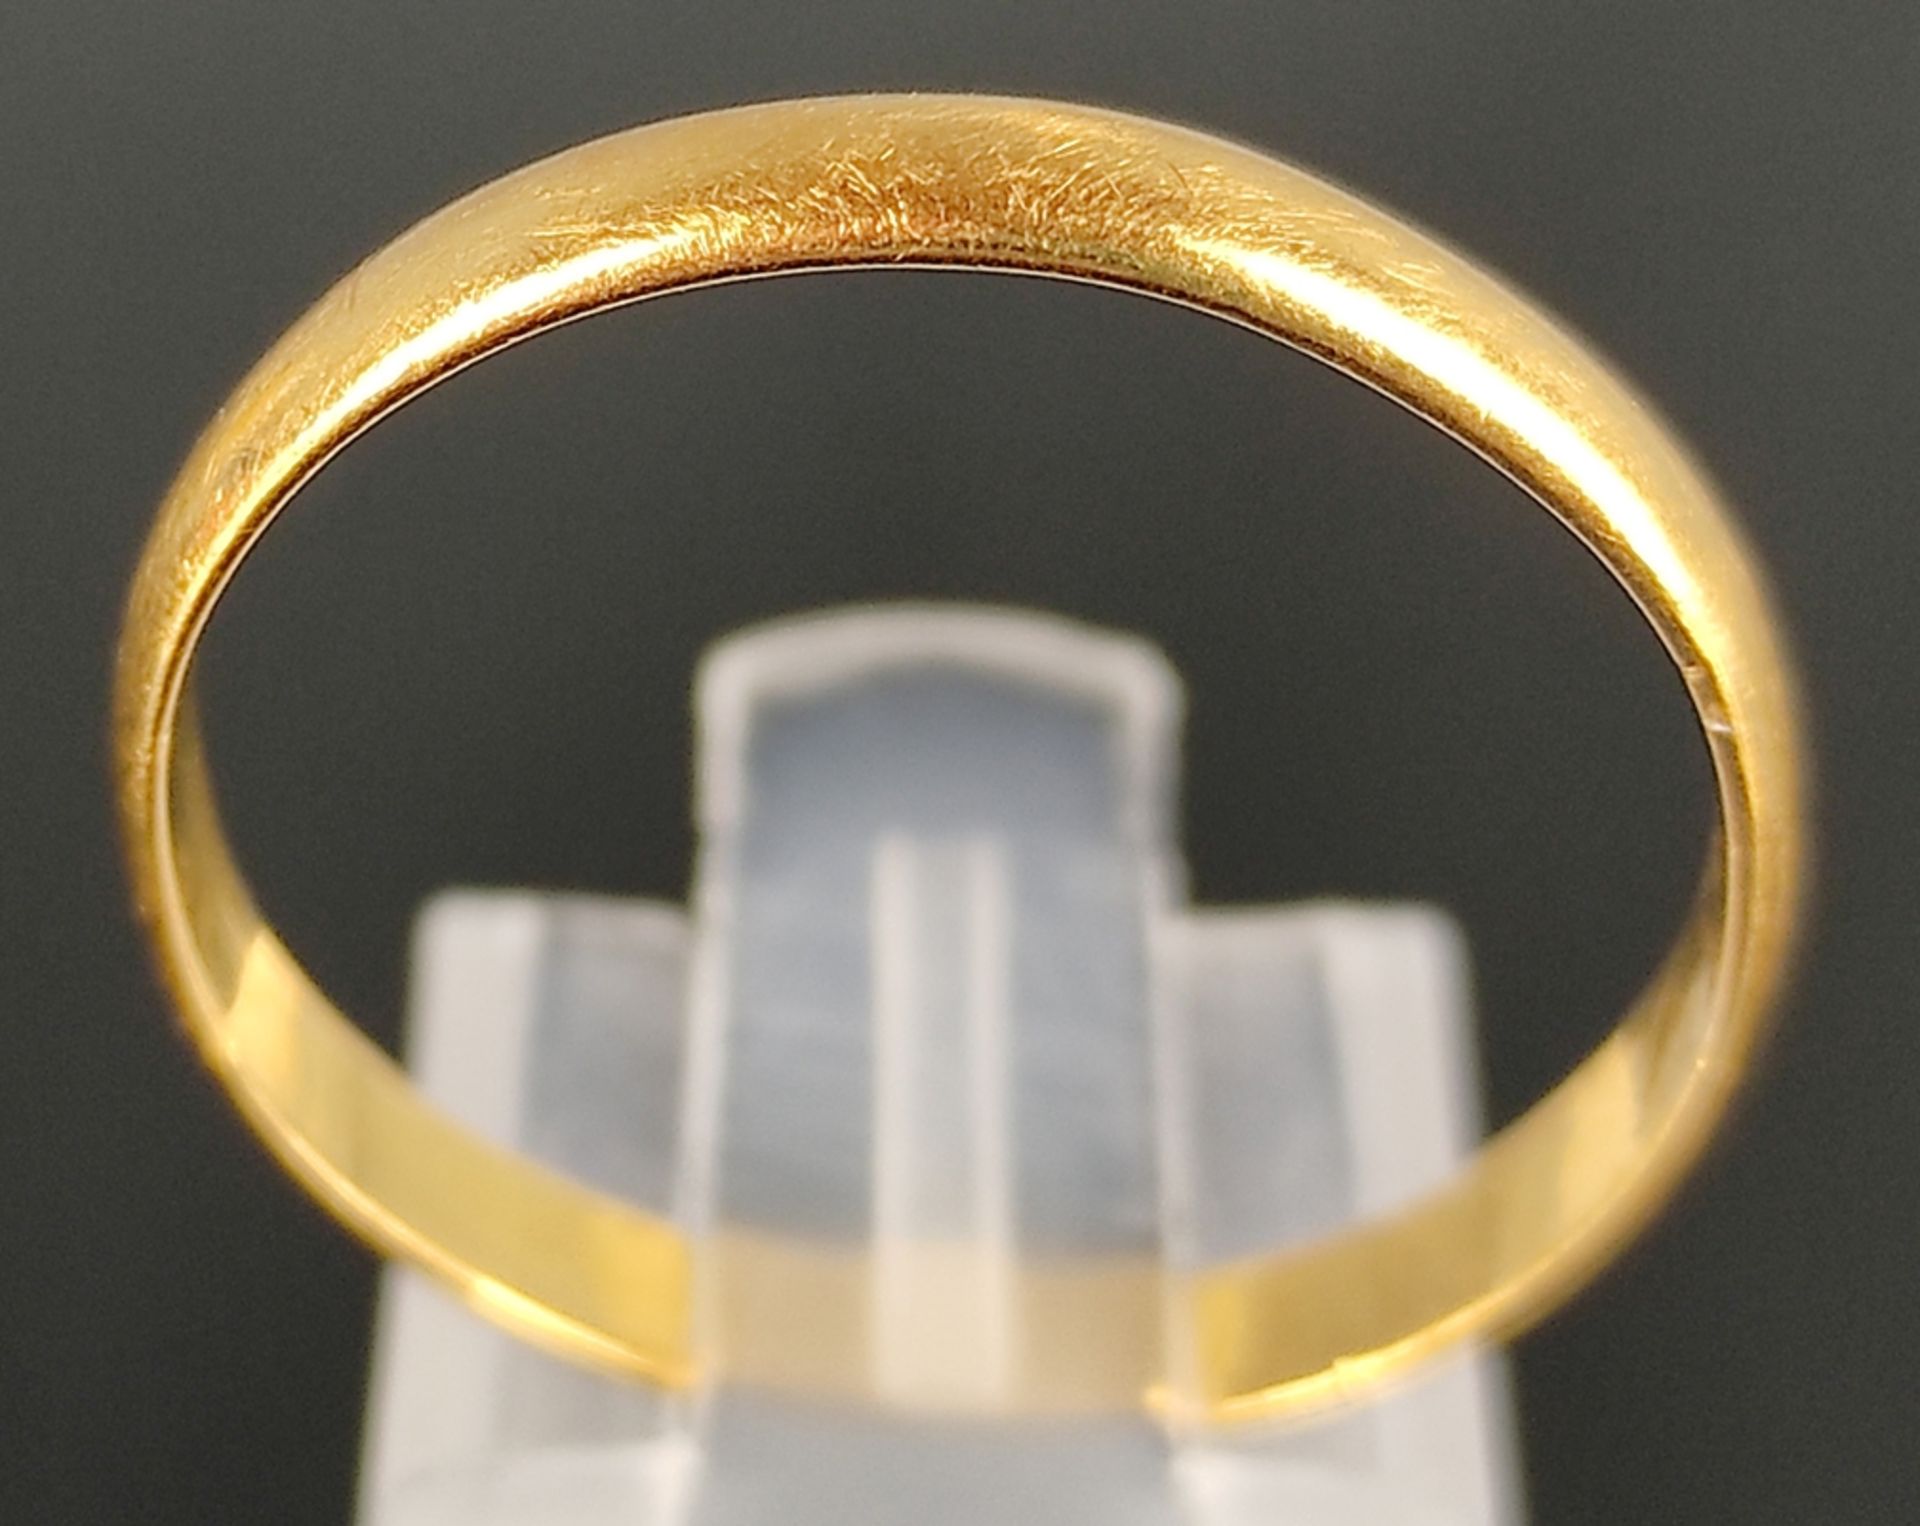 Ehering, 900/21,6K Gelbgold, 2,5g, Größe 62Wedding ring, 900/21.6K yellow gold, 2.5g, size 62 - Image 2 of 4